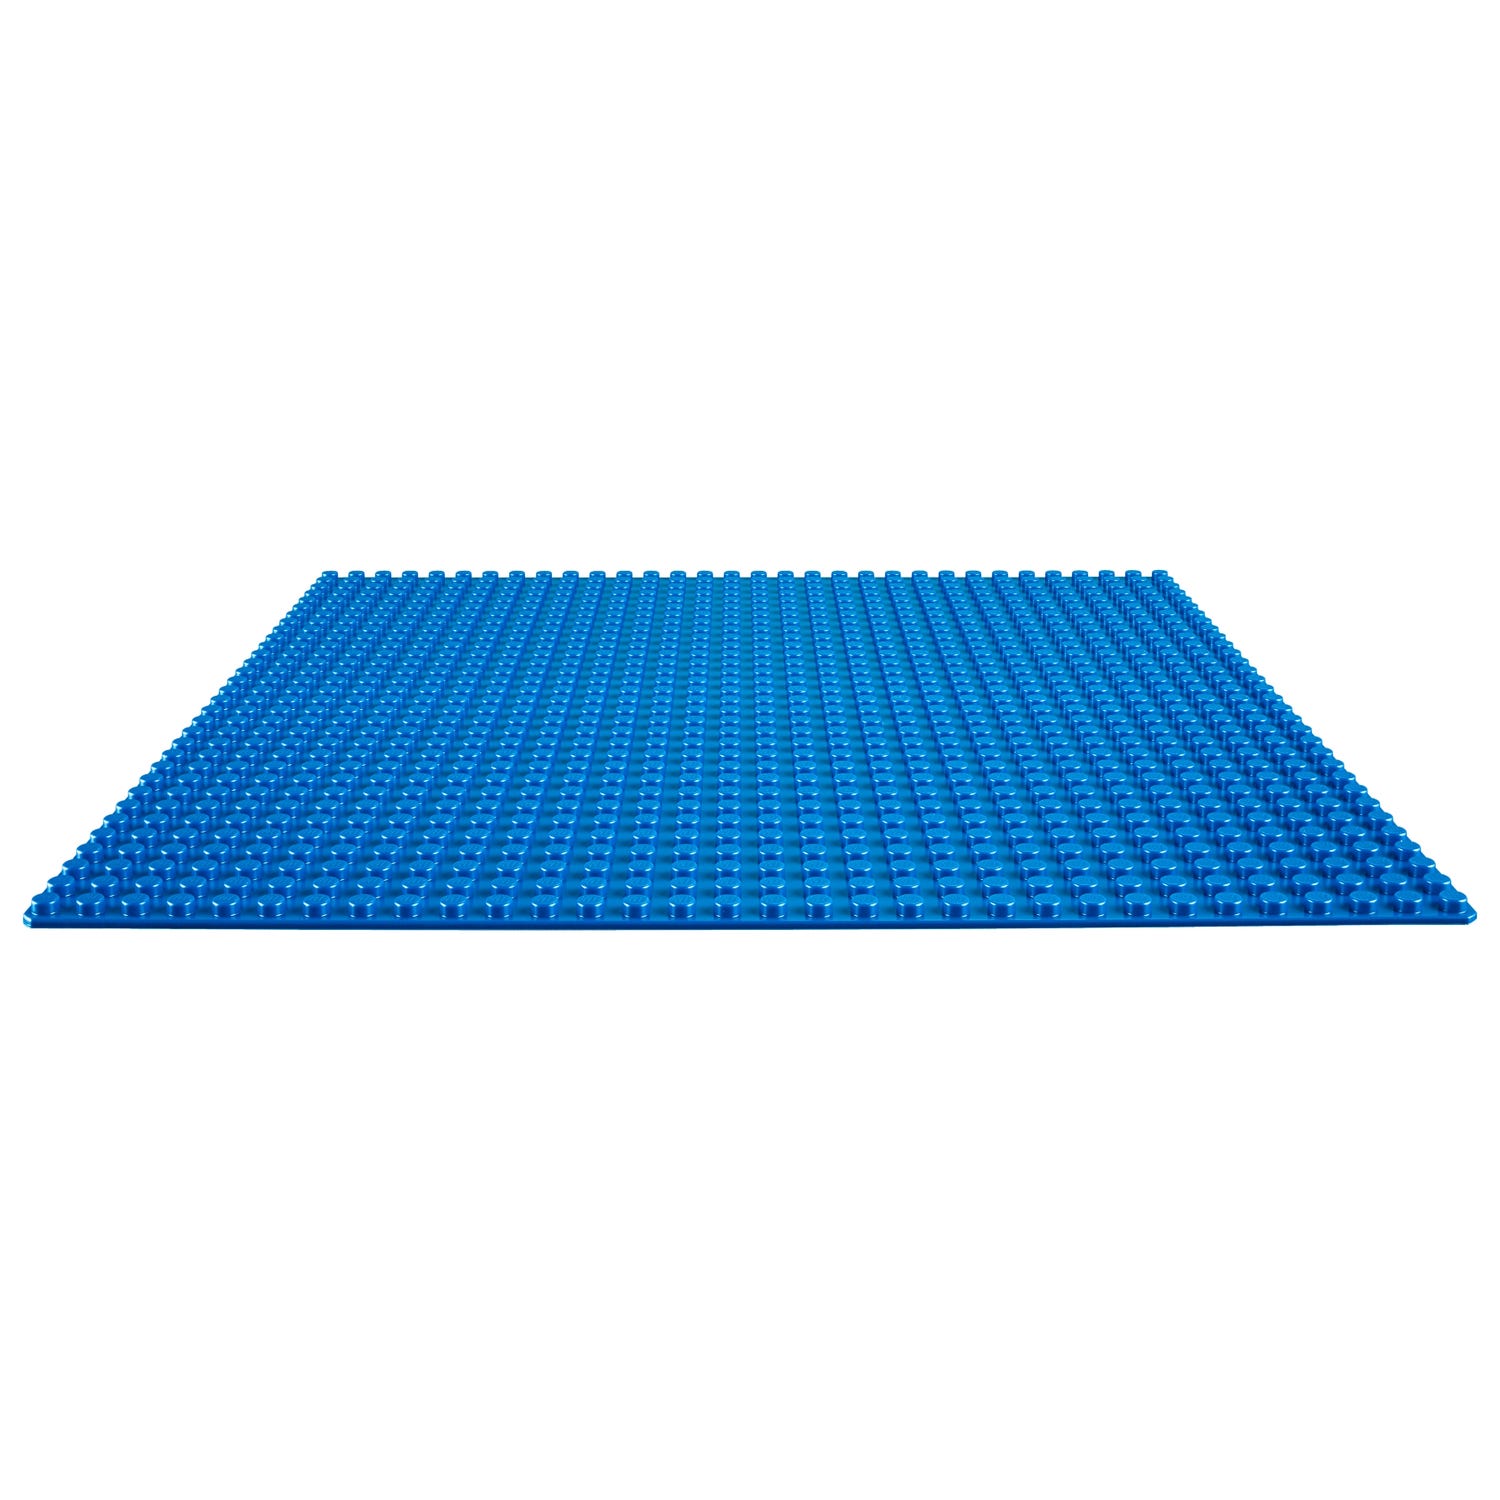 Hviske fond Machu Picchu Blue Baseplate 10714 | Classic | Buy online at the Official LEGO® Shop US